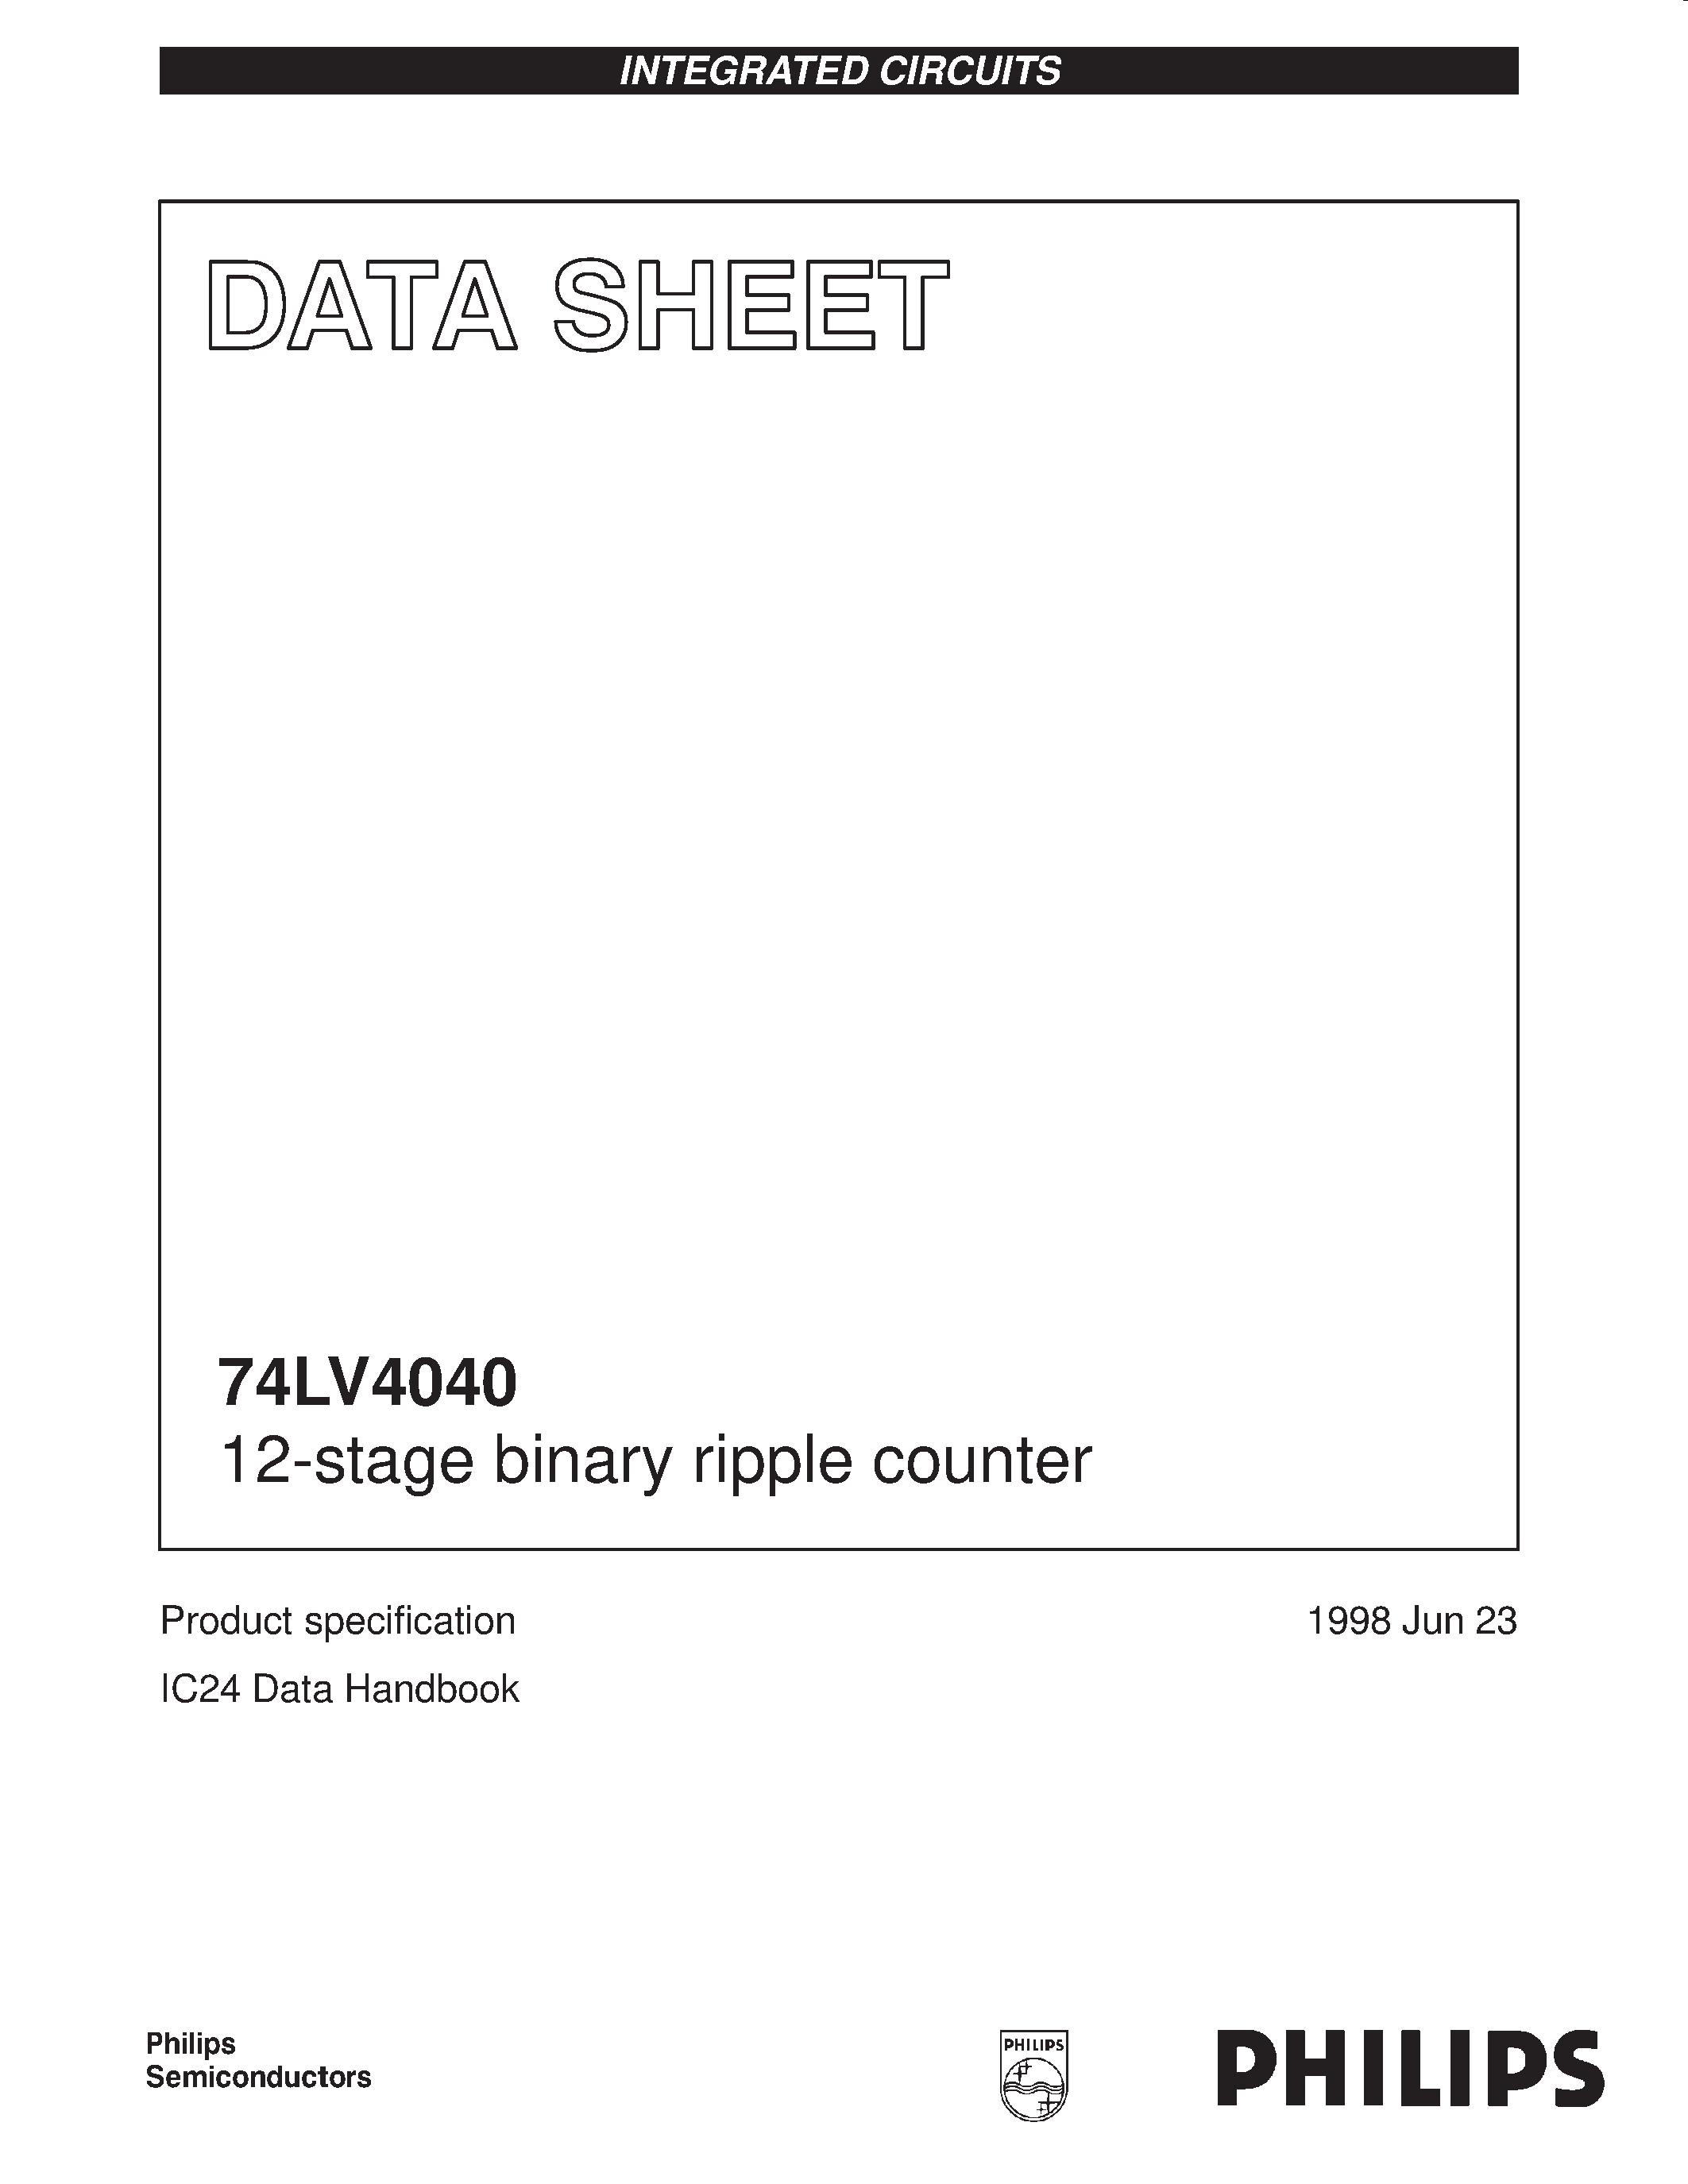 Даташит 74LV4040 - 12-stage binary ripple counter страница 1